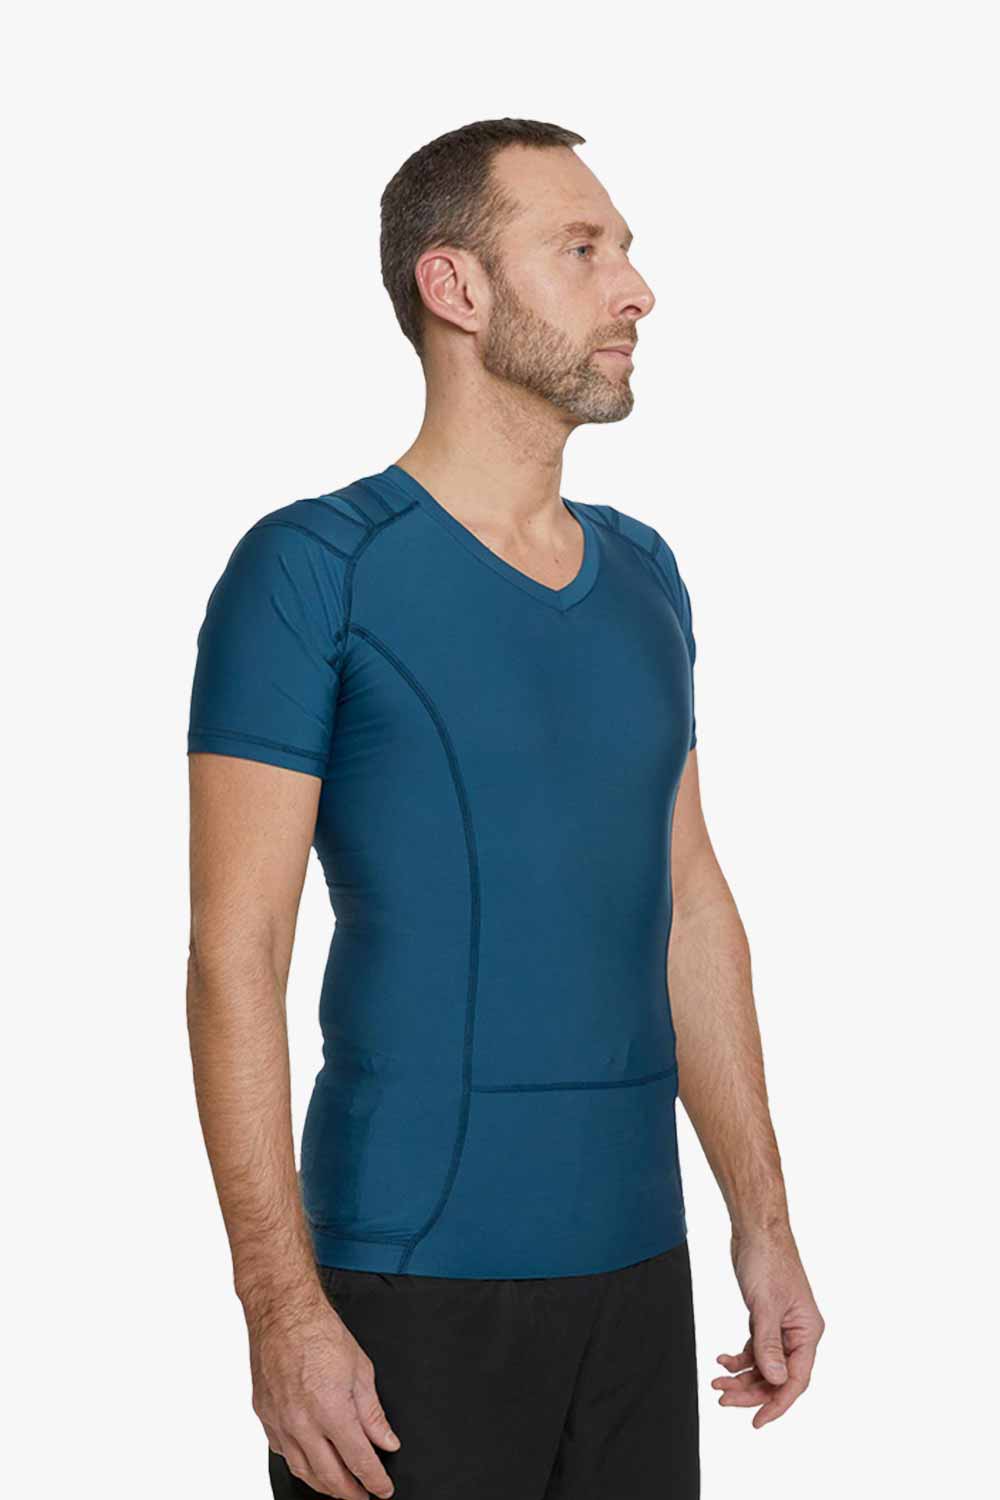 Men's Posture Shirt™ - Blå